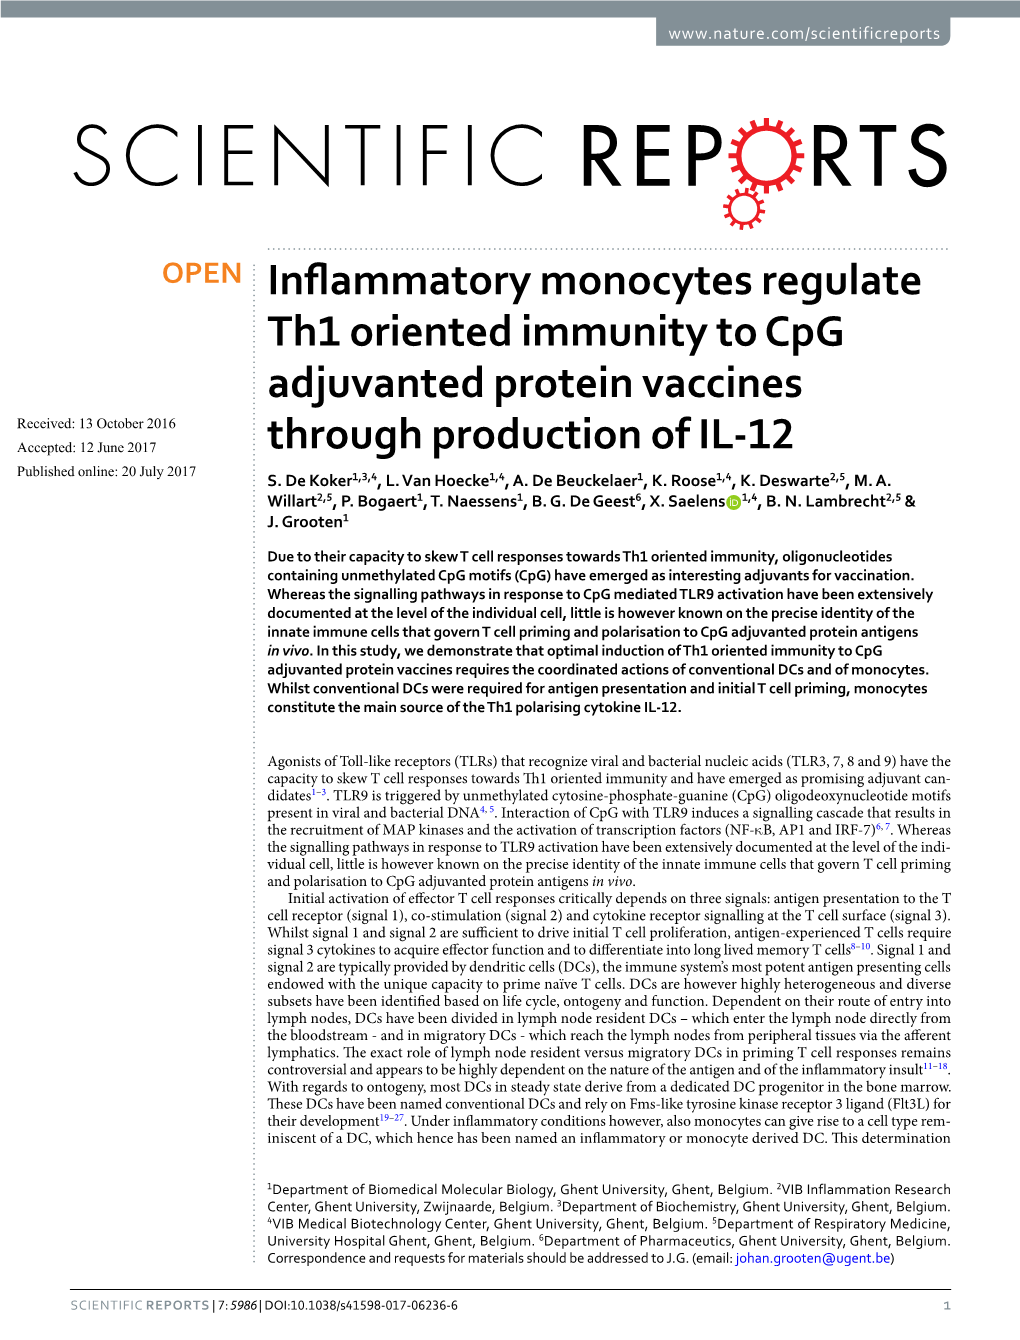 Inflammatory Monocytes Regulate Th1 Oriented Immunity to Cpg